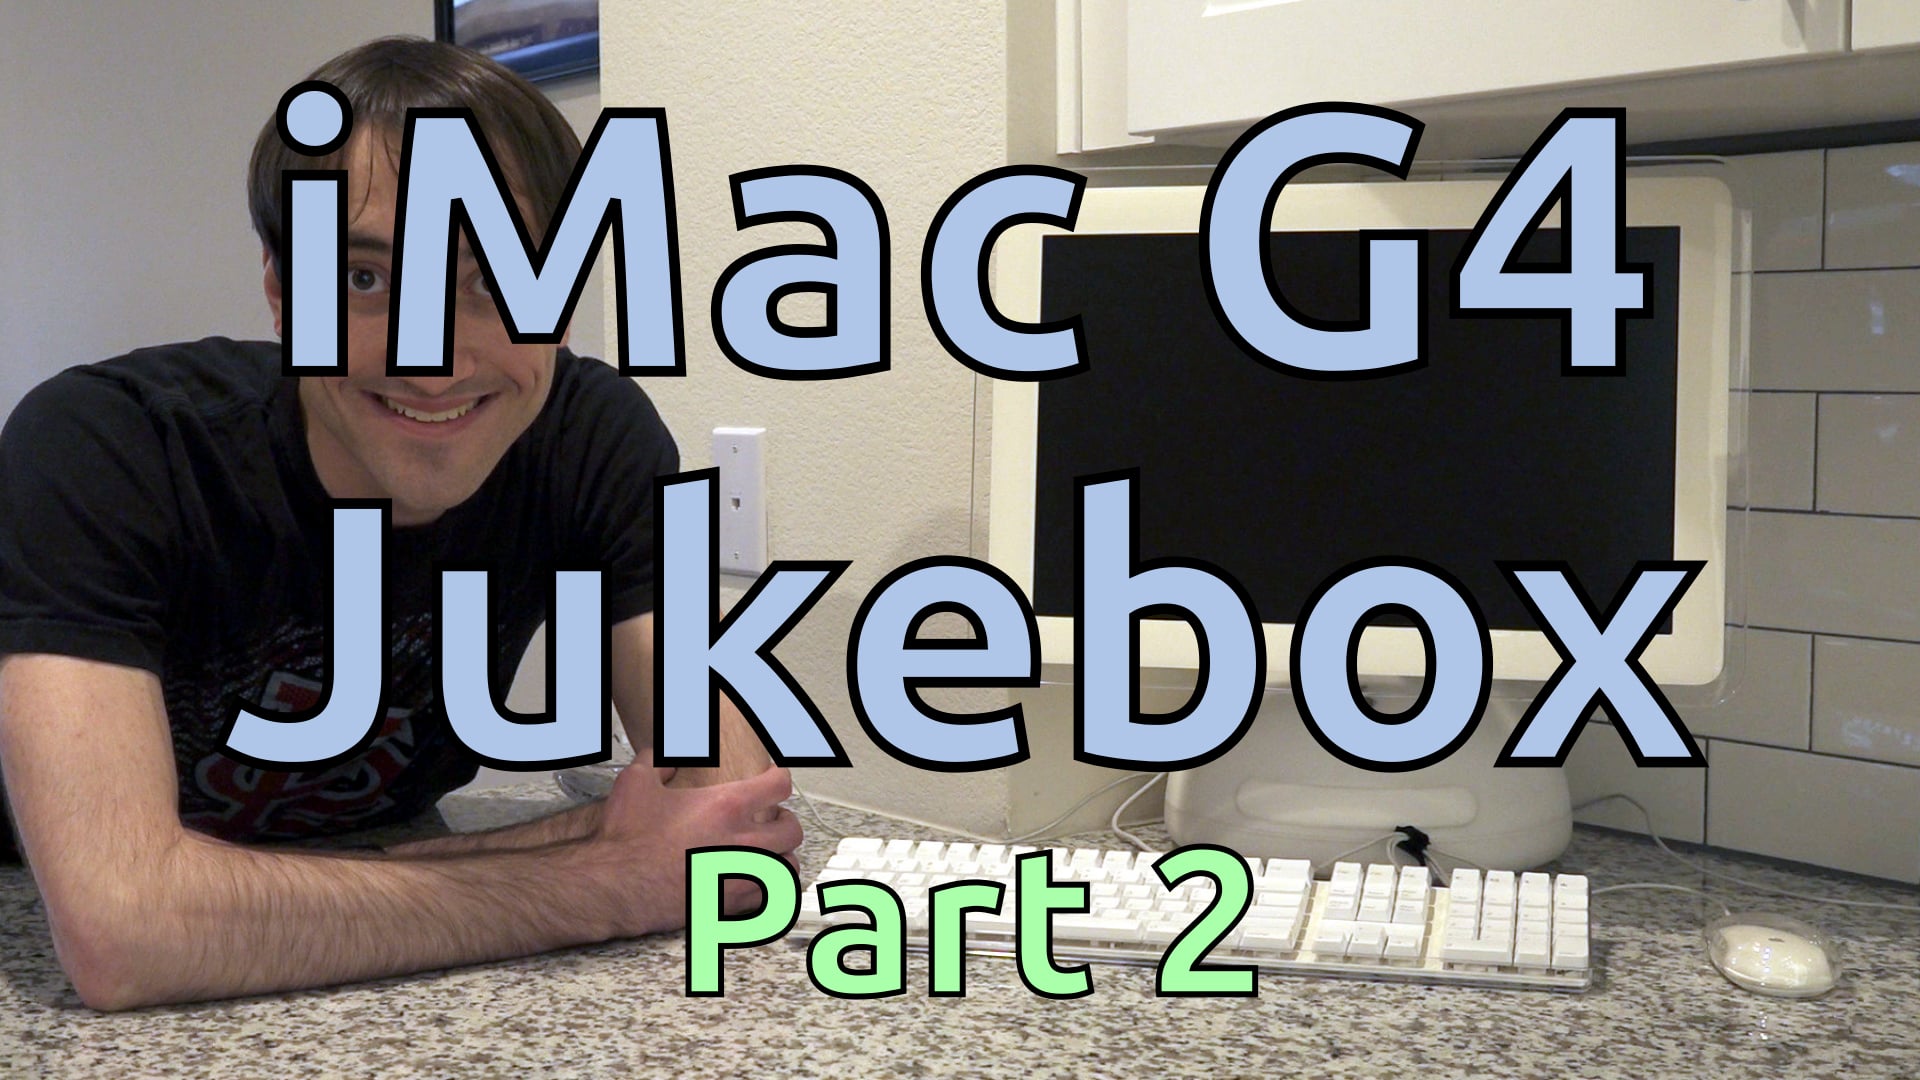 iMac G4 Jukebox (Part 2)